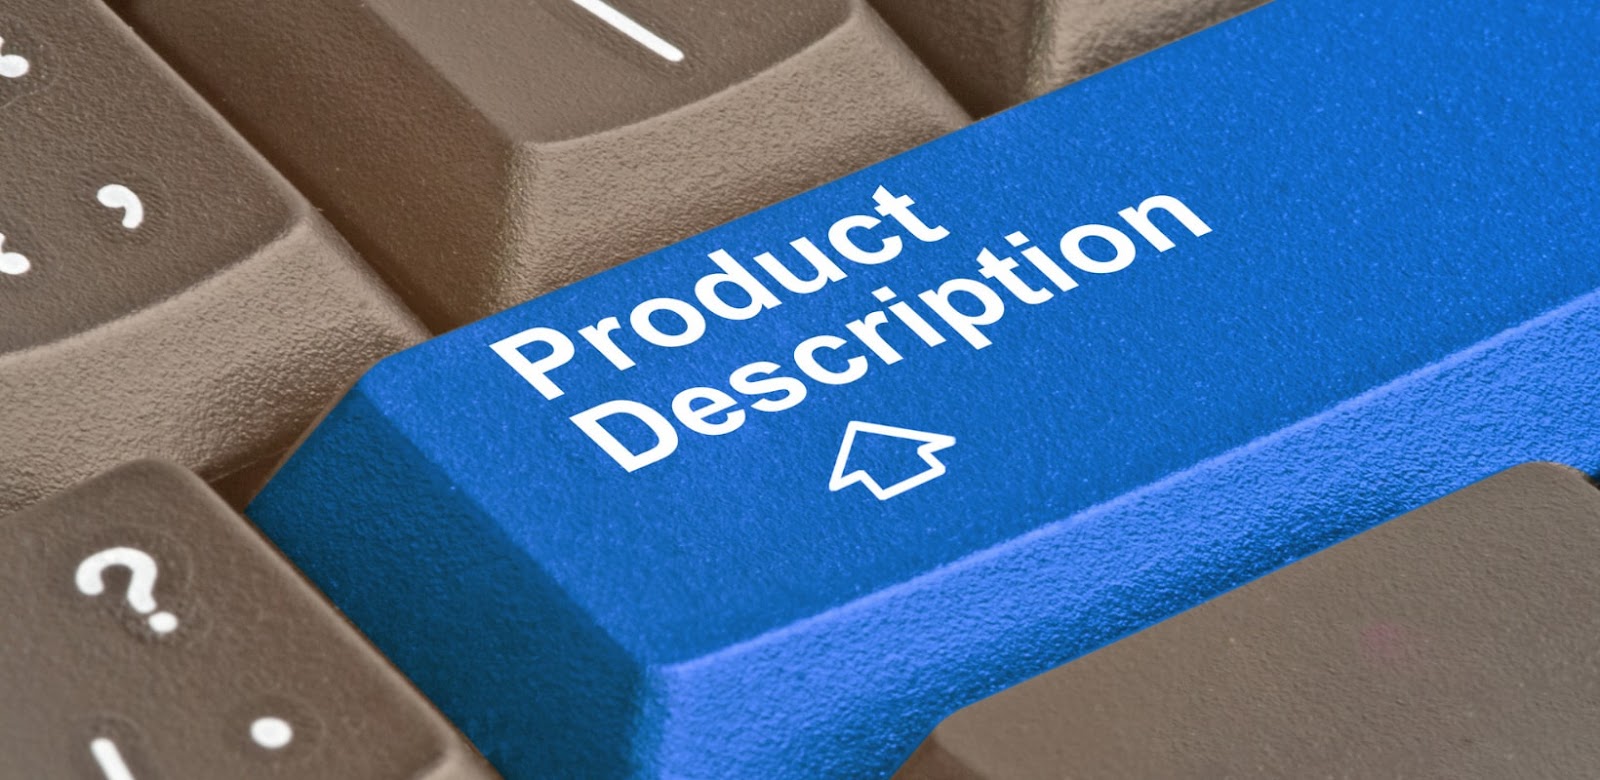 Top 12+ Product Description Generator Tools (+ Pricing, Key Features)